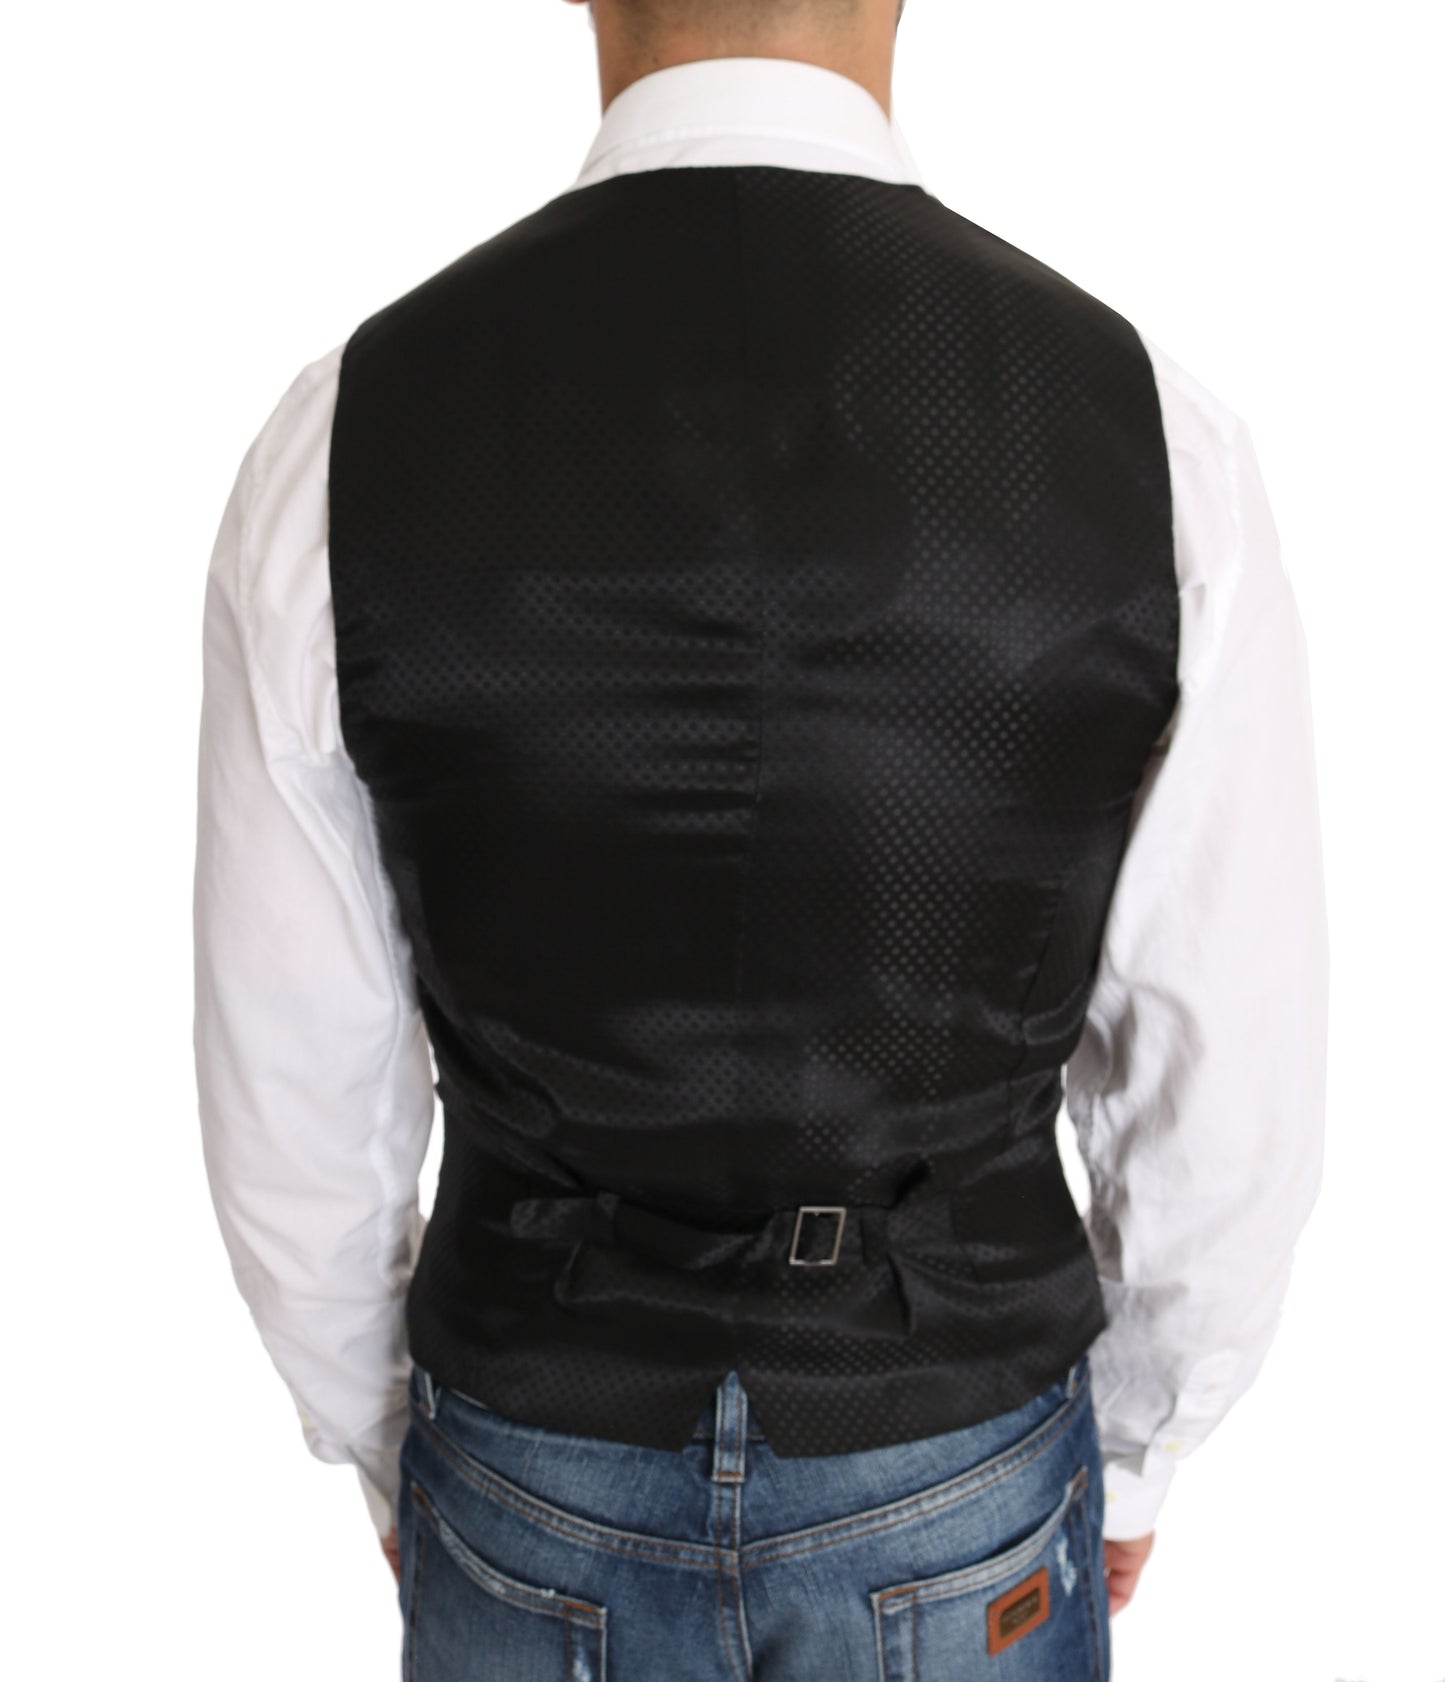 Elegant Gray Circle Pattern Blazer and Vest Set